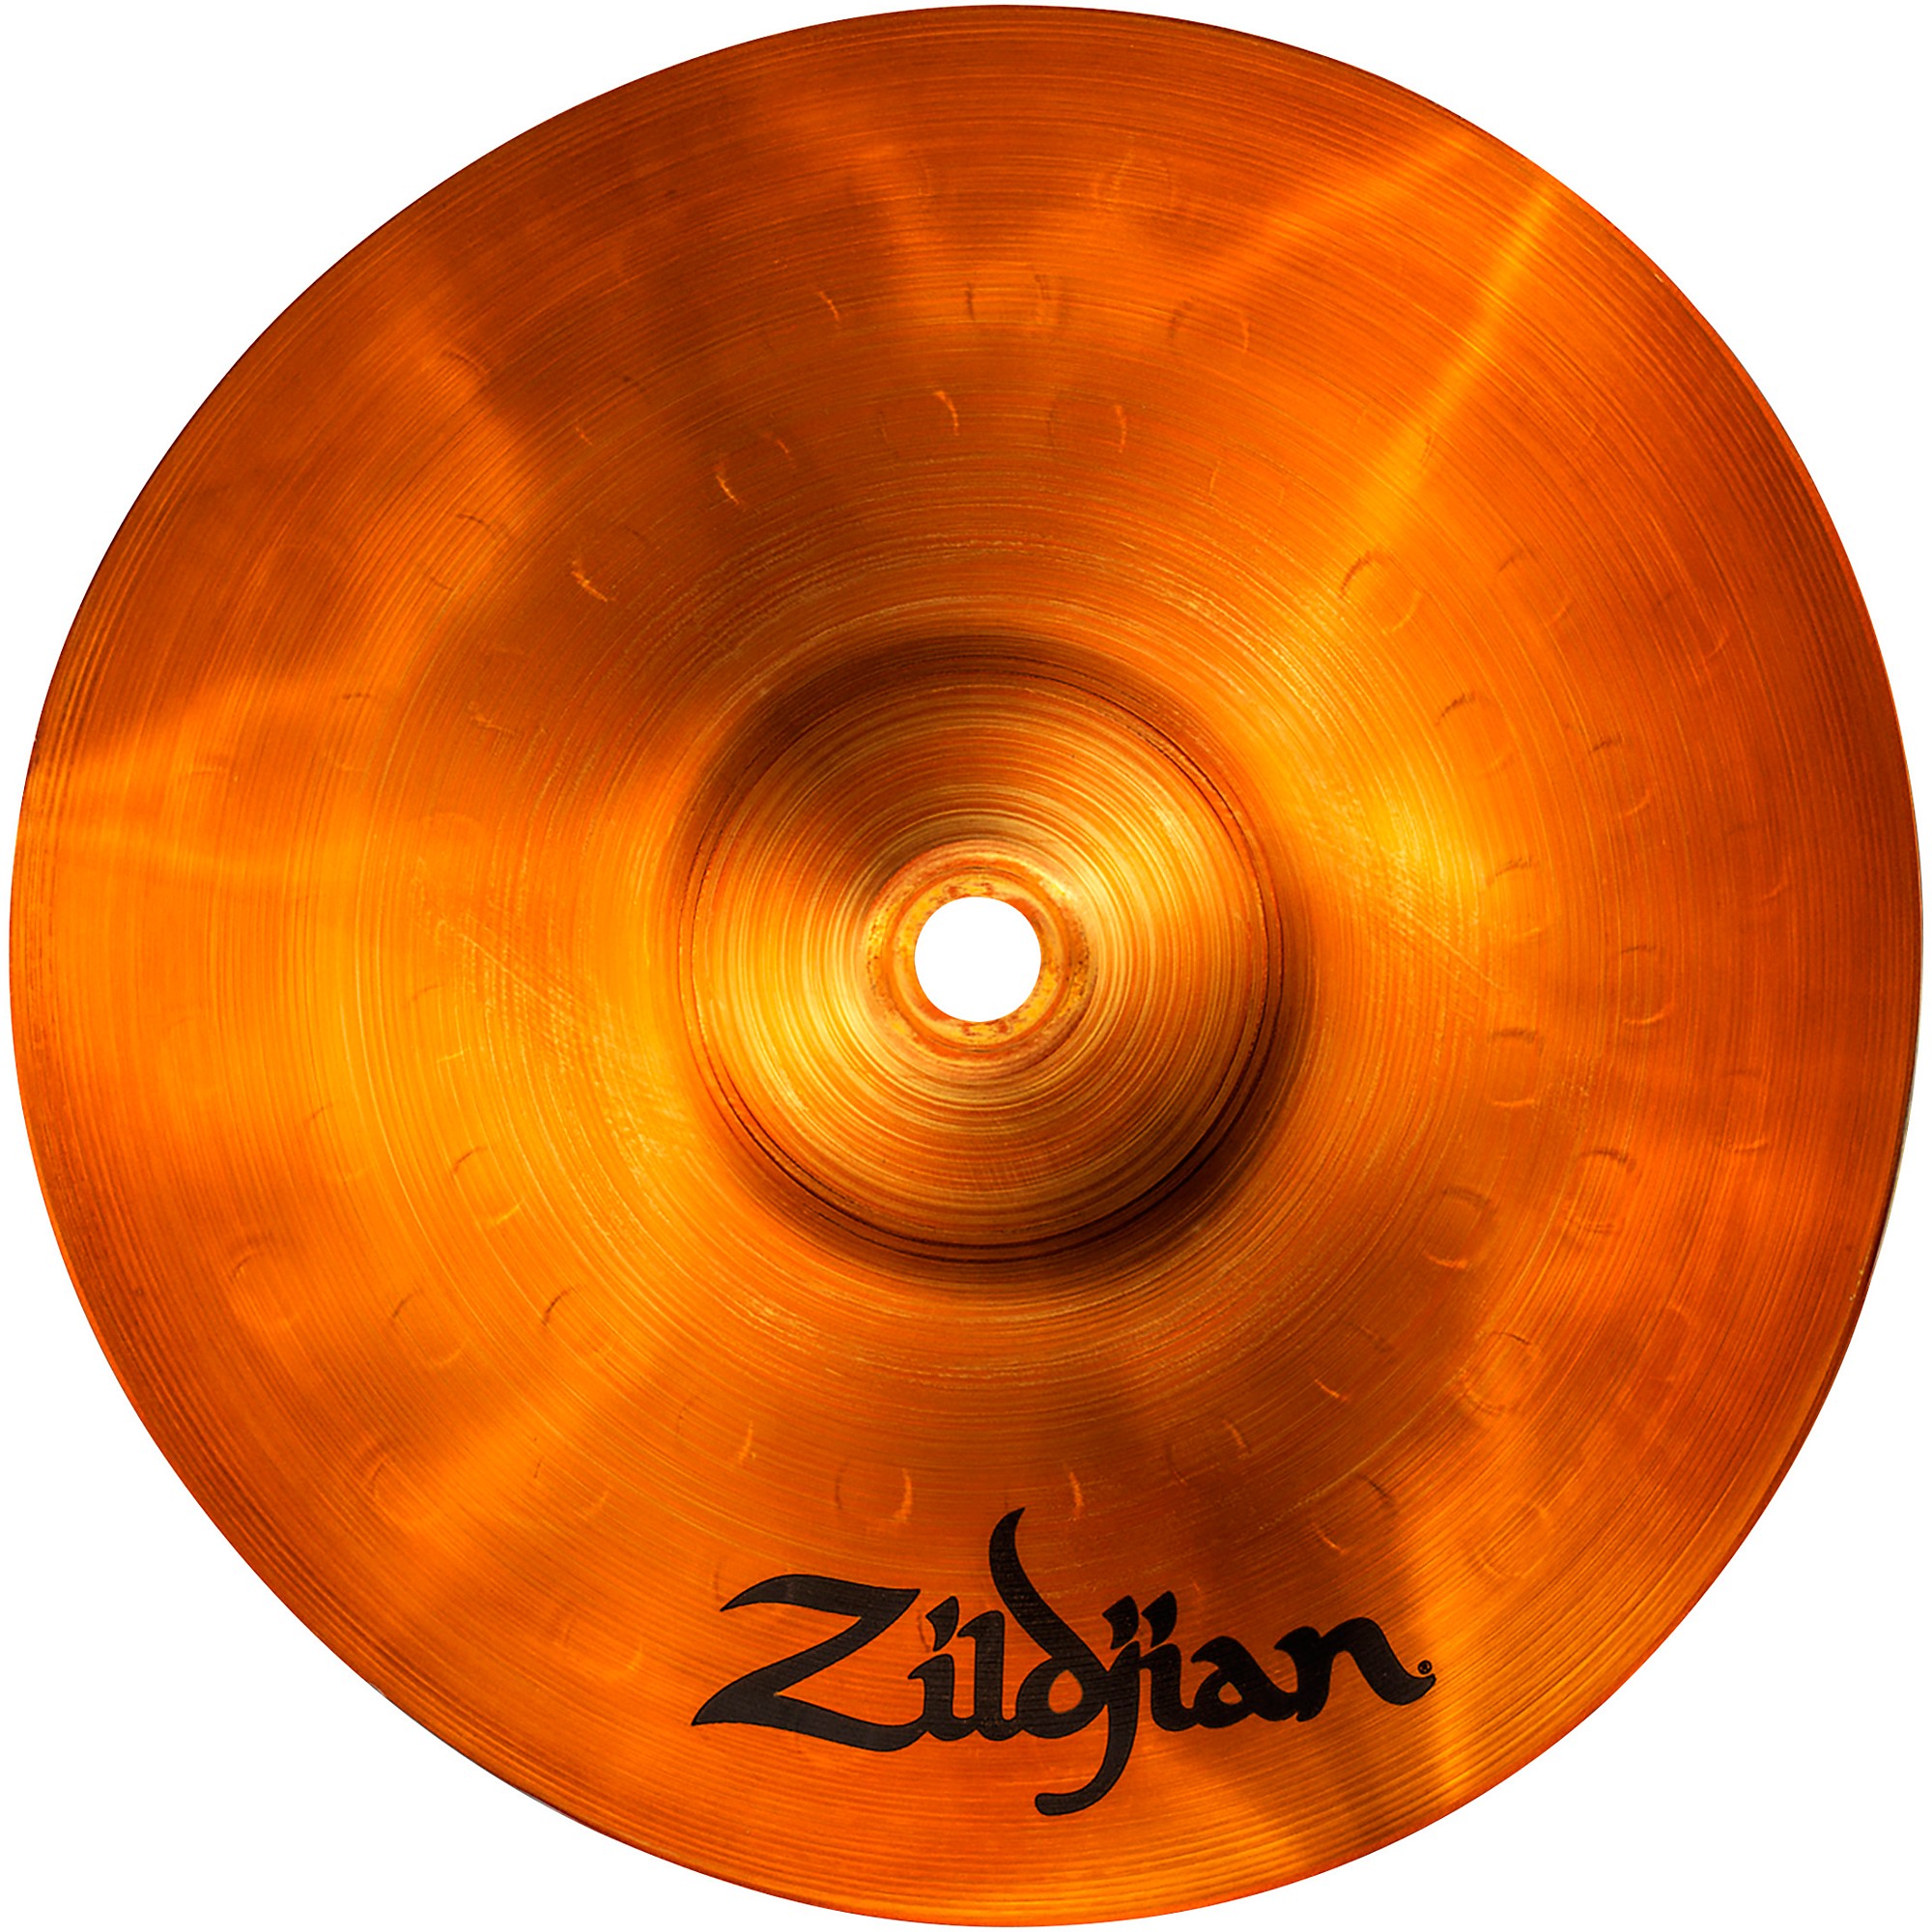 Zildjian ZXT Trashformer Cymbal 8 in. | Guitar Center